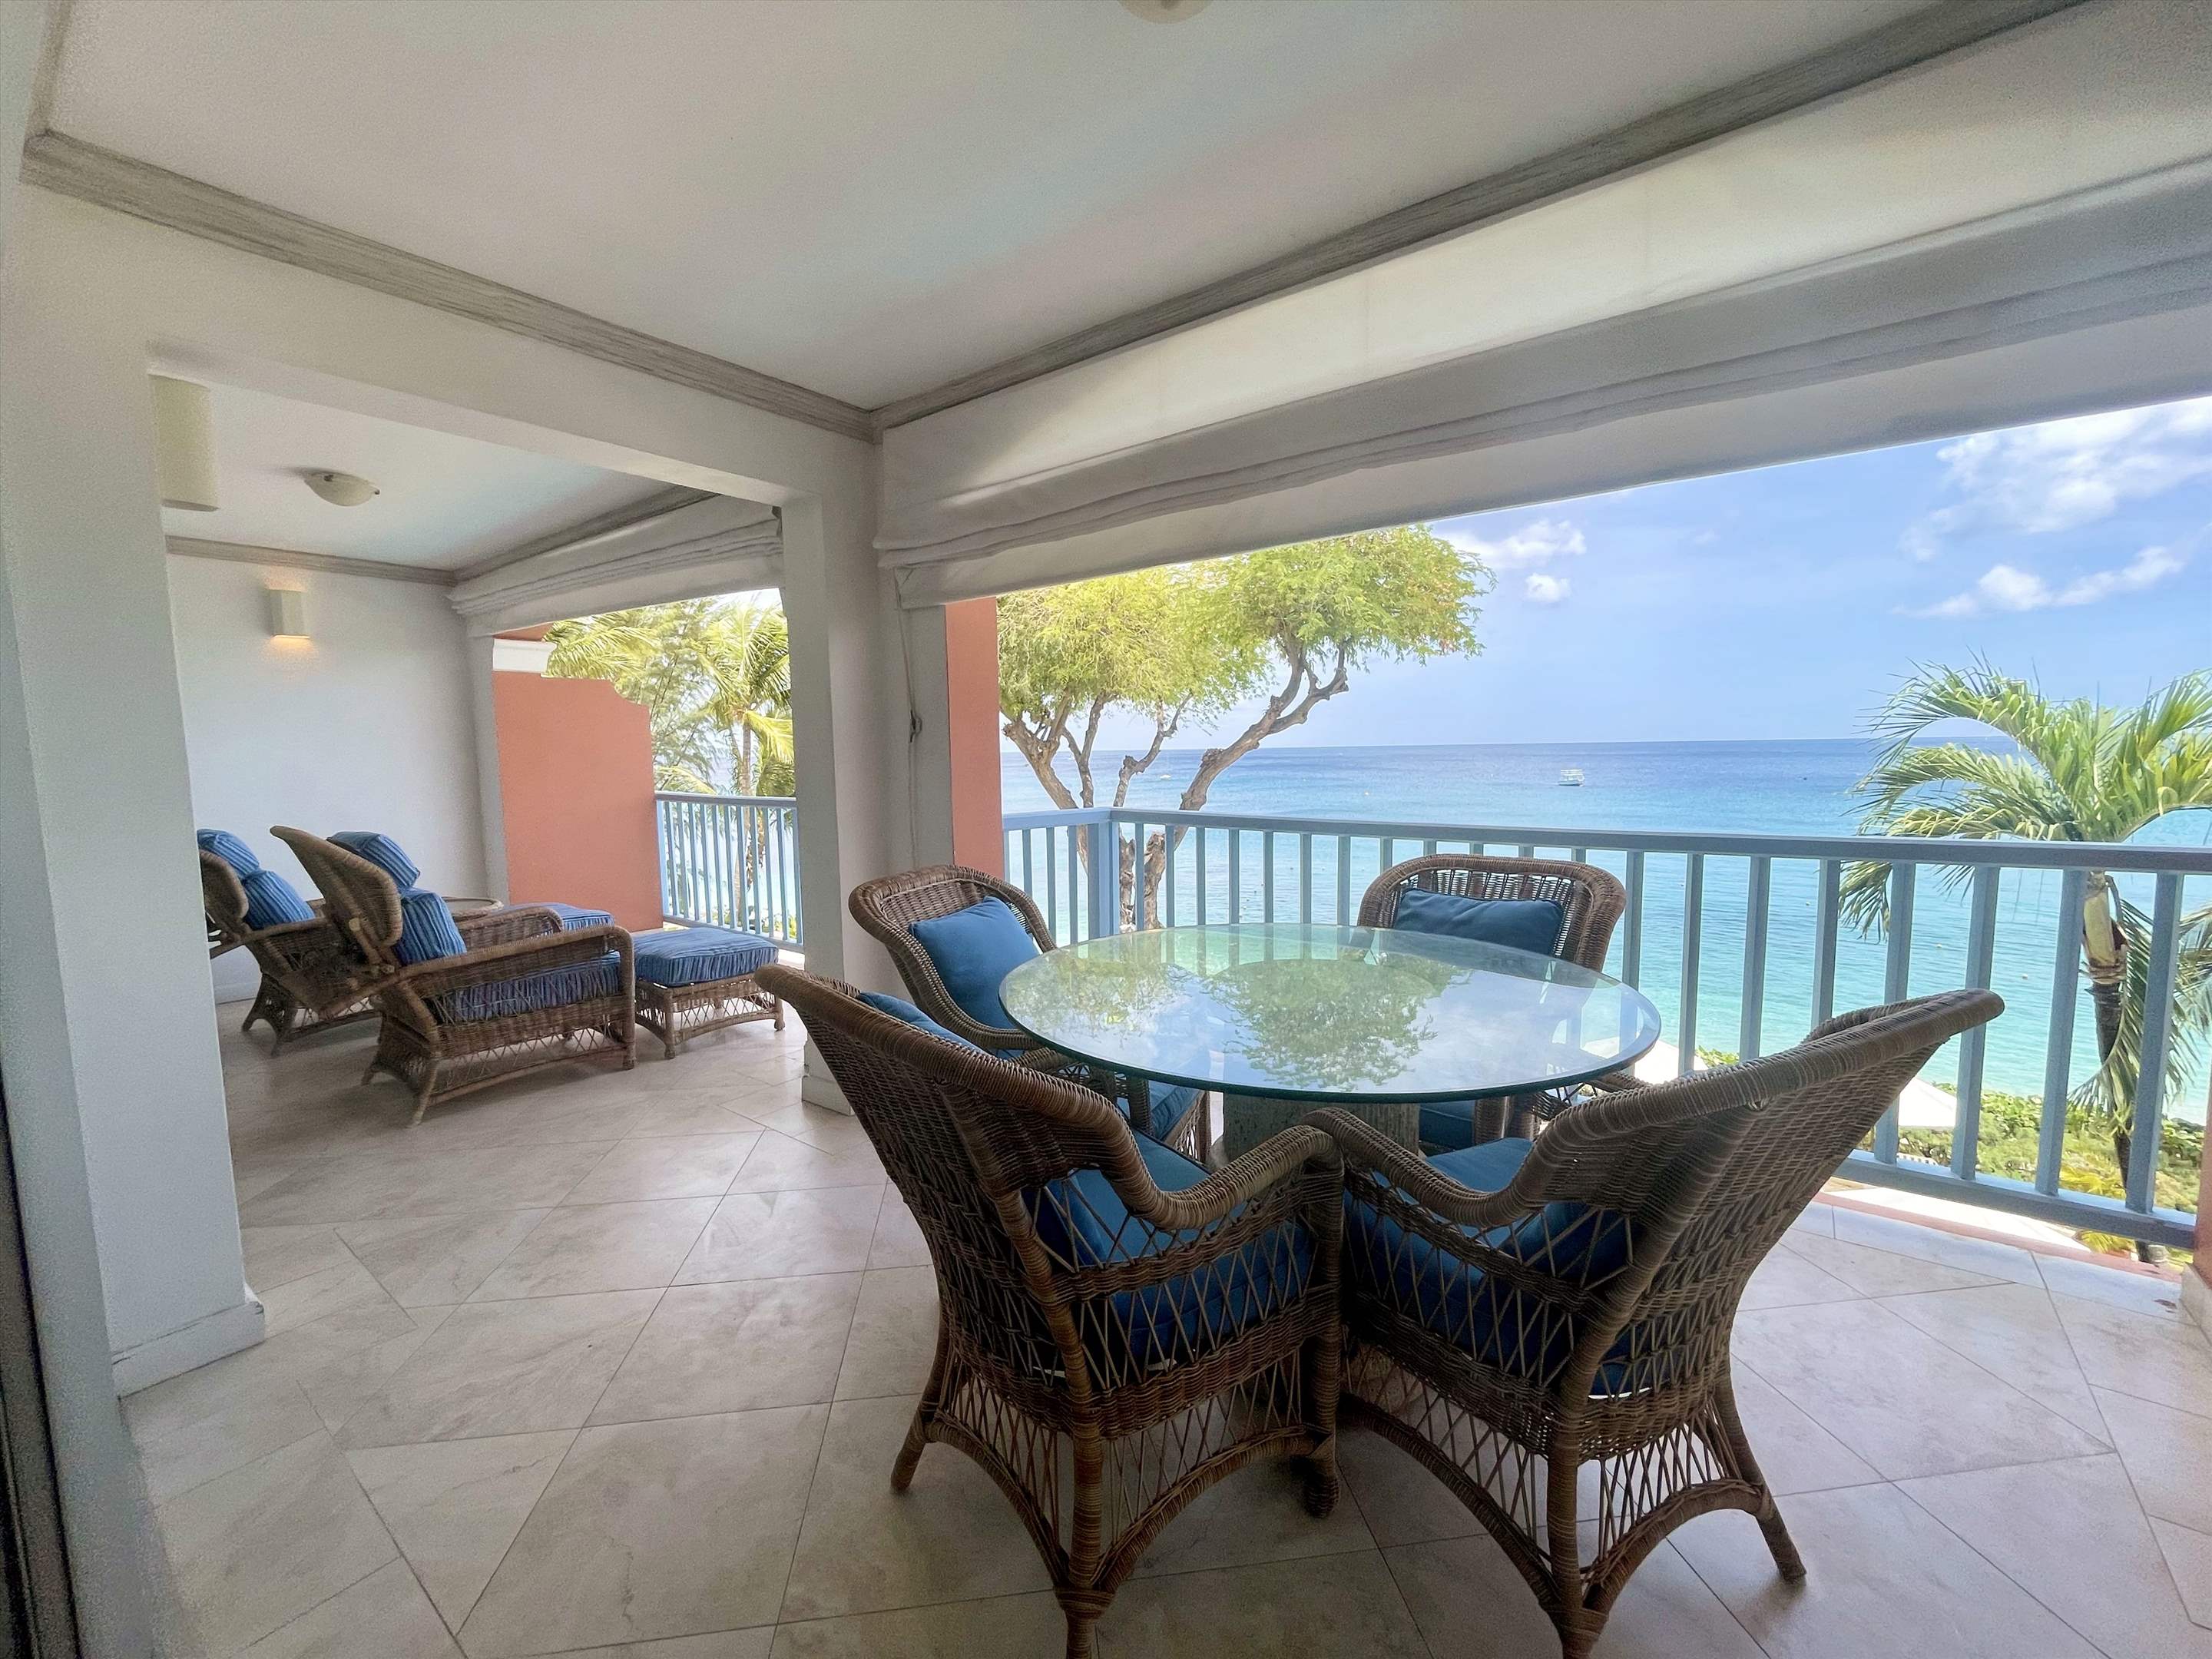 Villas on the Beach 303, 1 bedroom, 1 bedroom apartment in St. James & West Coast, Barbados Photo #3